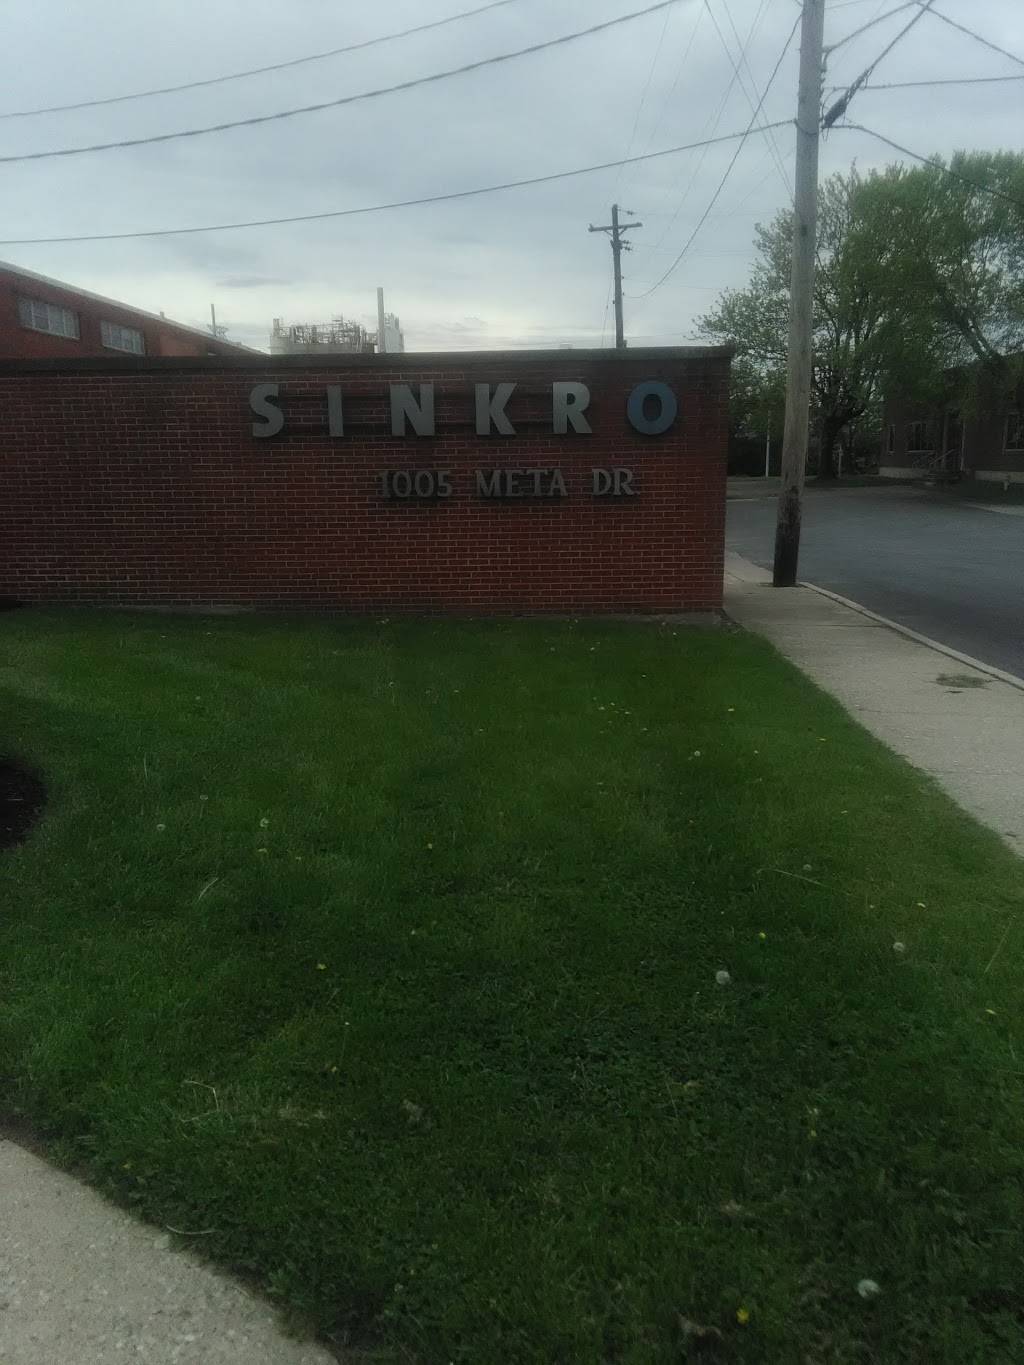 Sinkro Ink | 1005 Meta Dr, Cincinnati, OH 45237, USA | Phone: (513) 771-2876